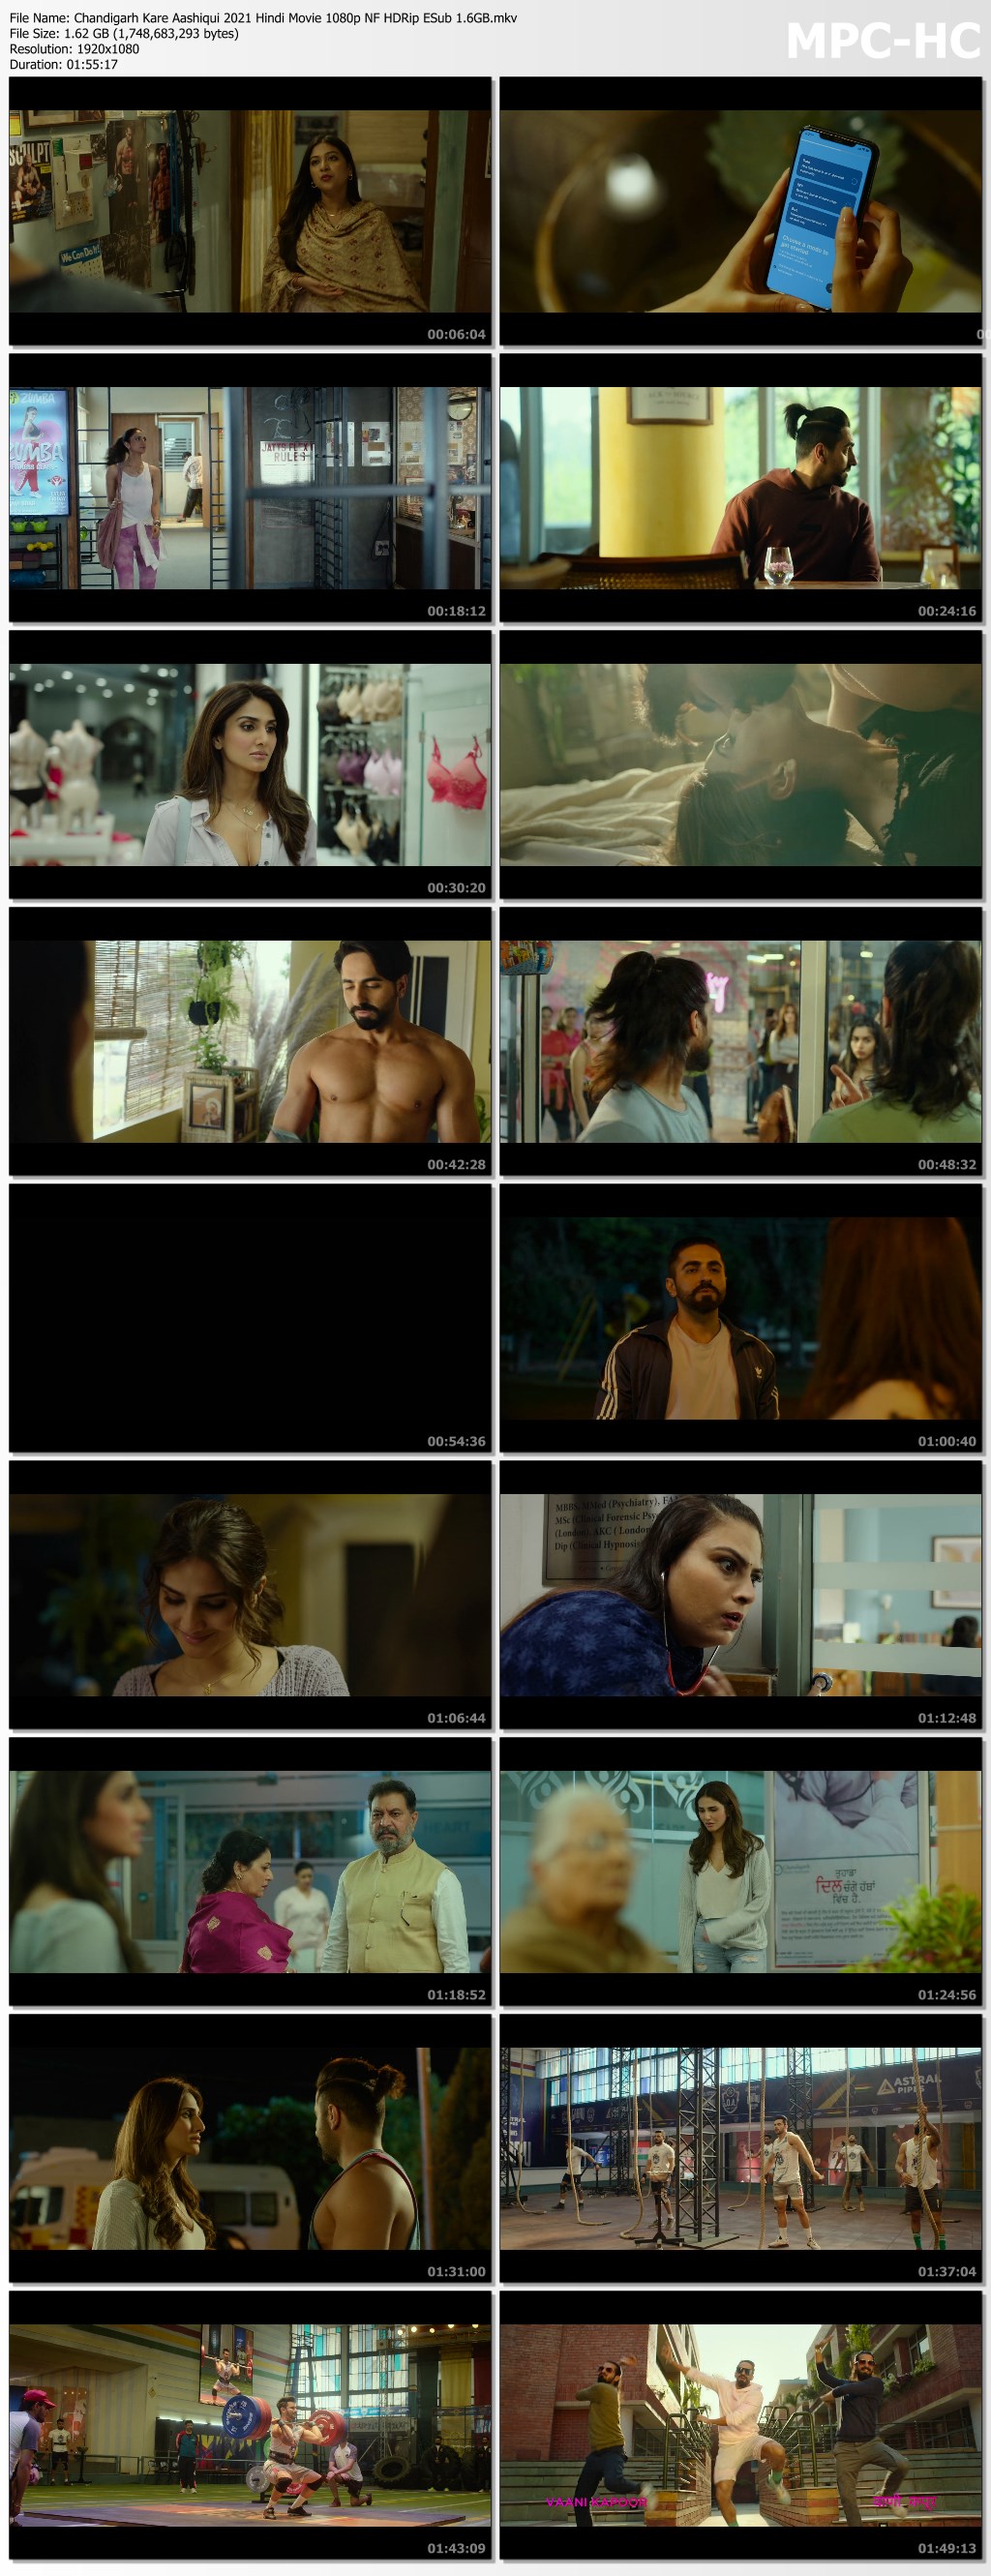 Chandigarh Kare Aashiqui 2021 Hindi Movie 1080p NF HDRip ESub 1.6GB.mkv thumbs